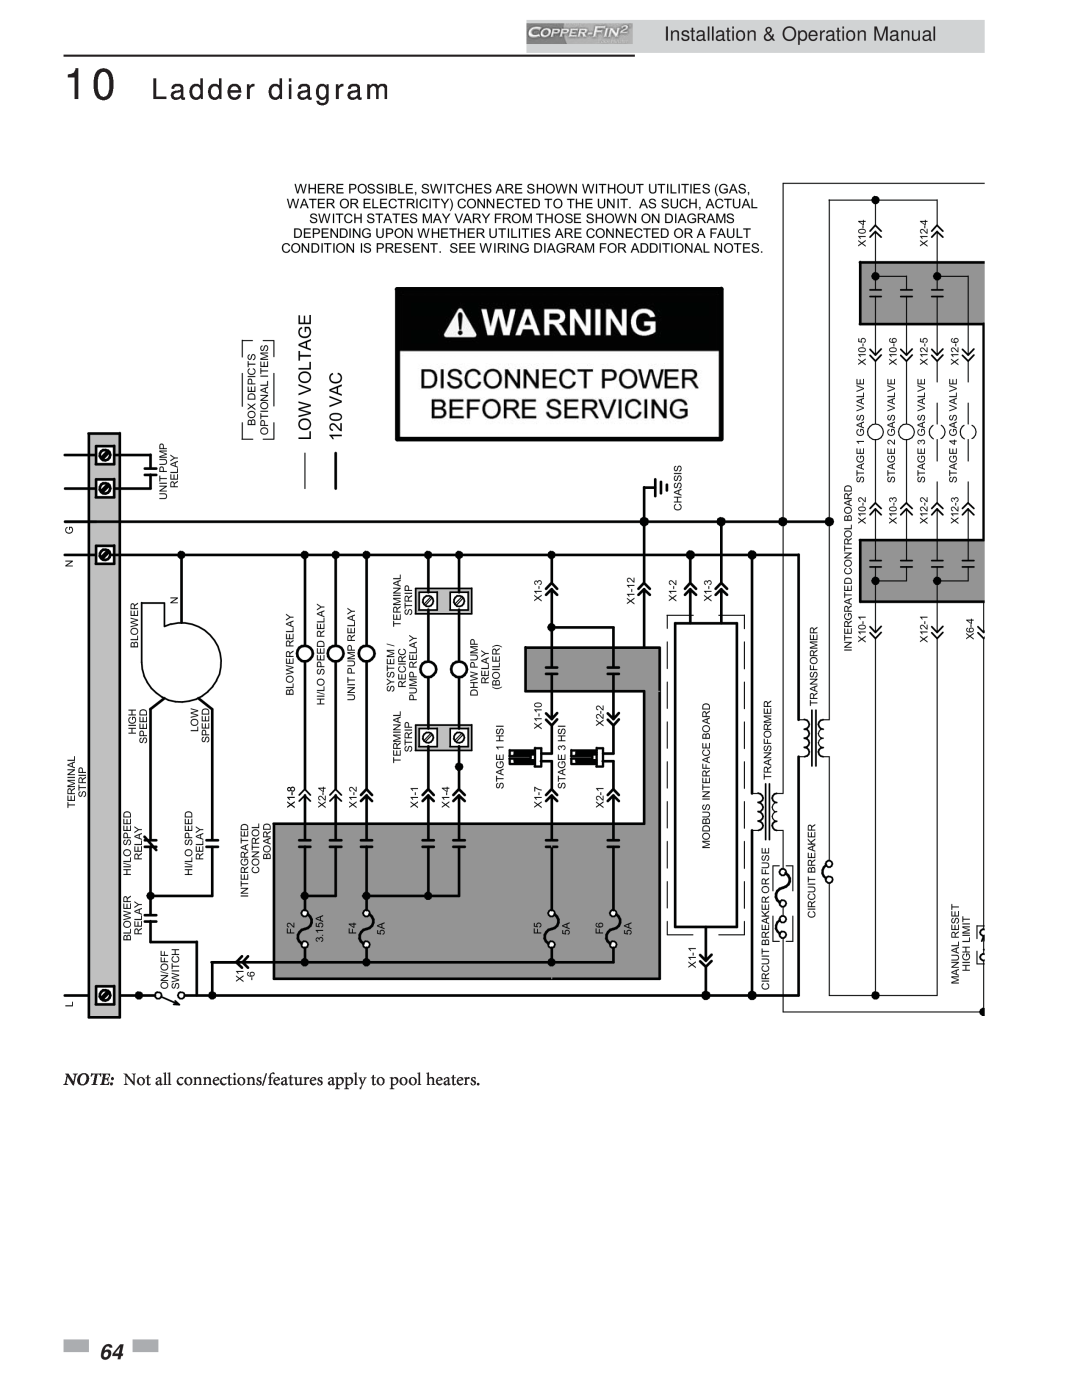 Lochinvar 502, 2072 operation manual Ladder diagram, Installation & Operation Manual, Low Voltage, 120 VAC 